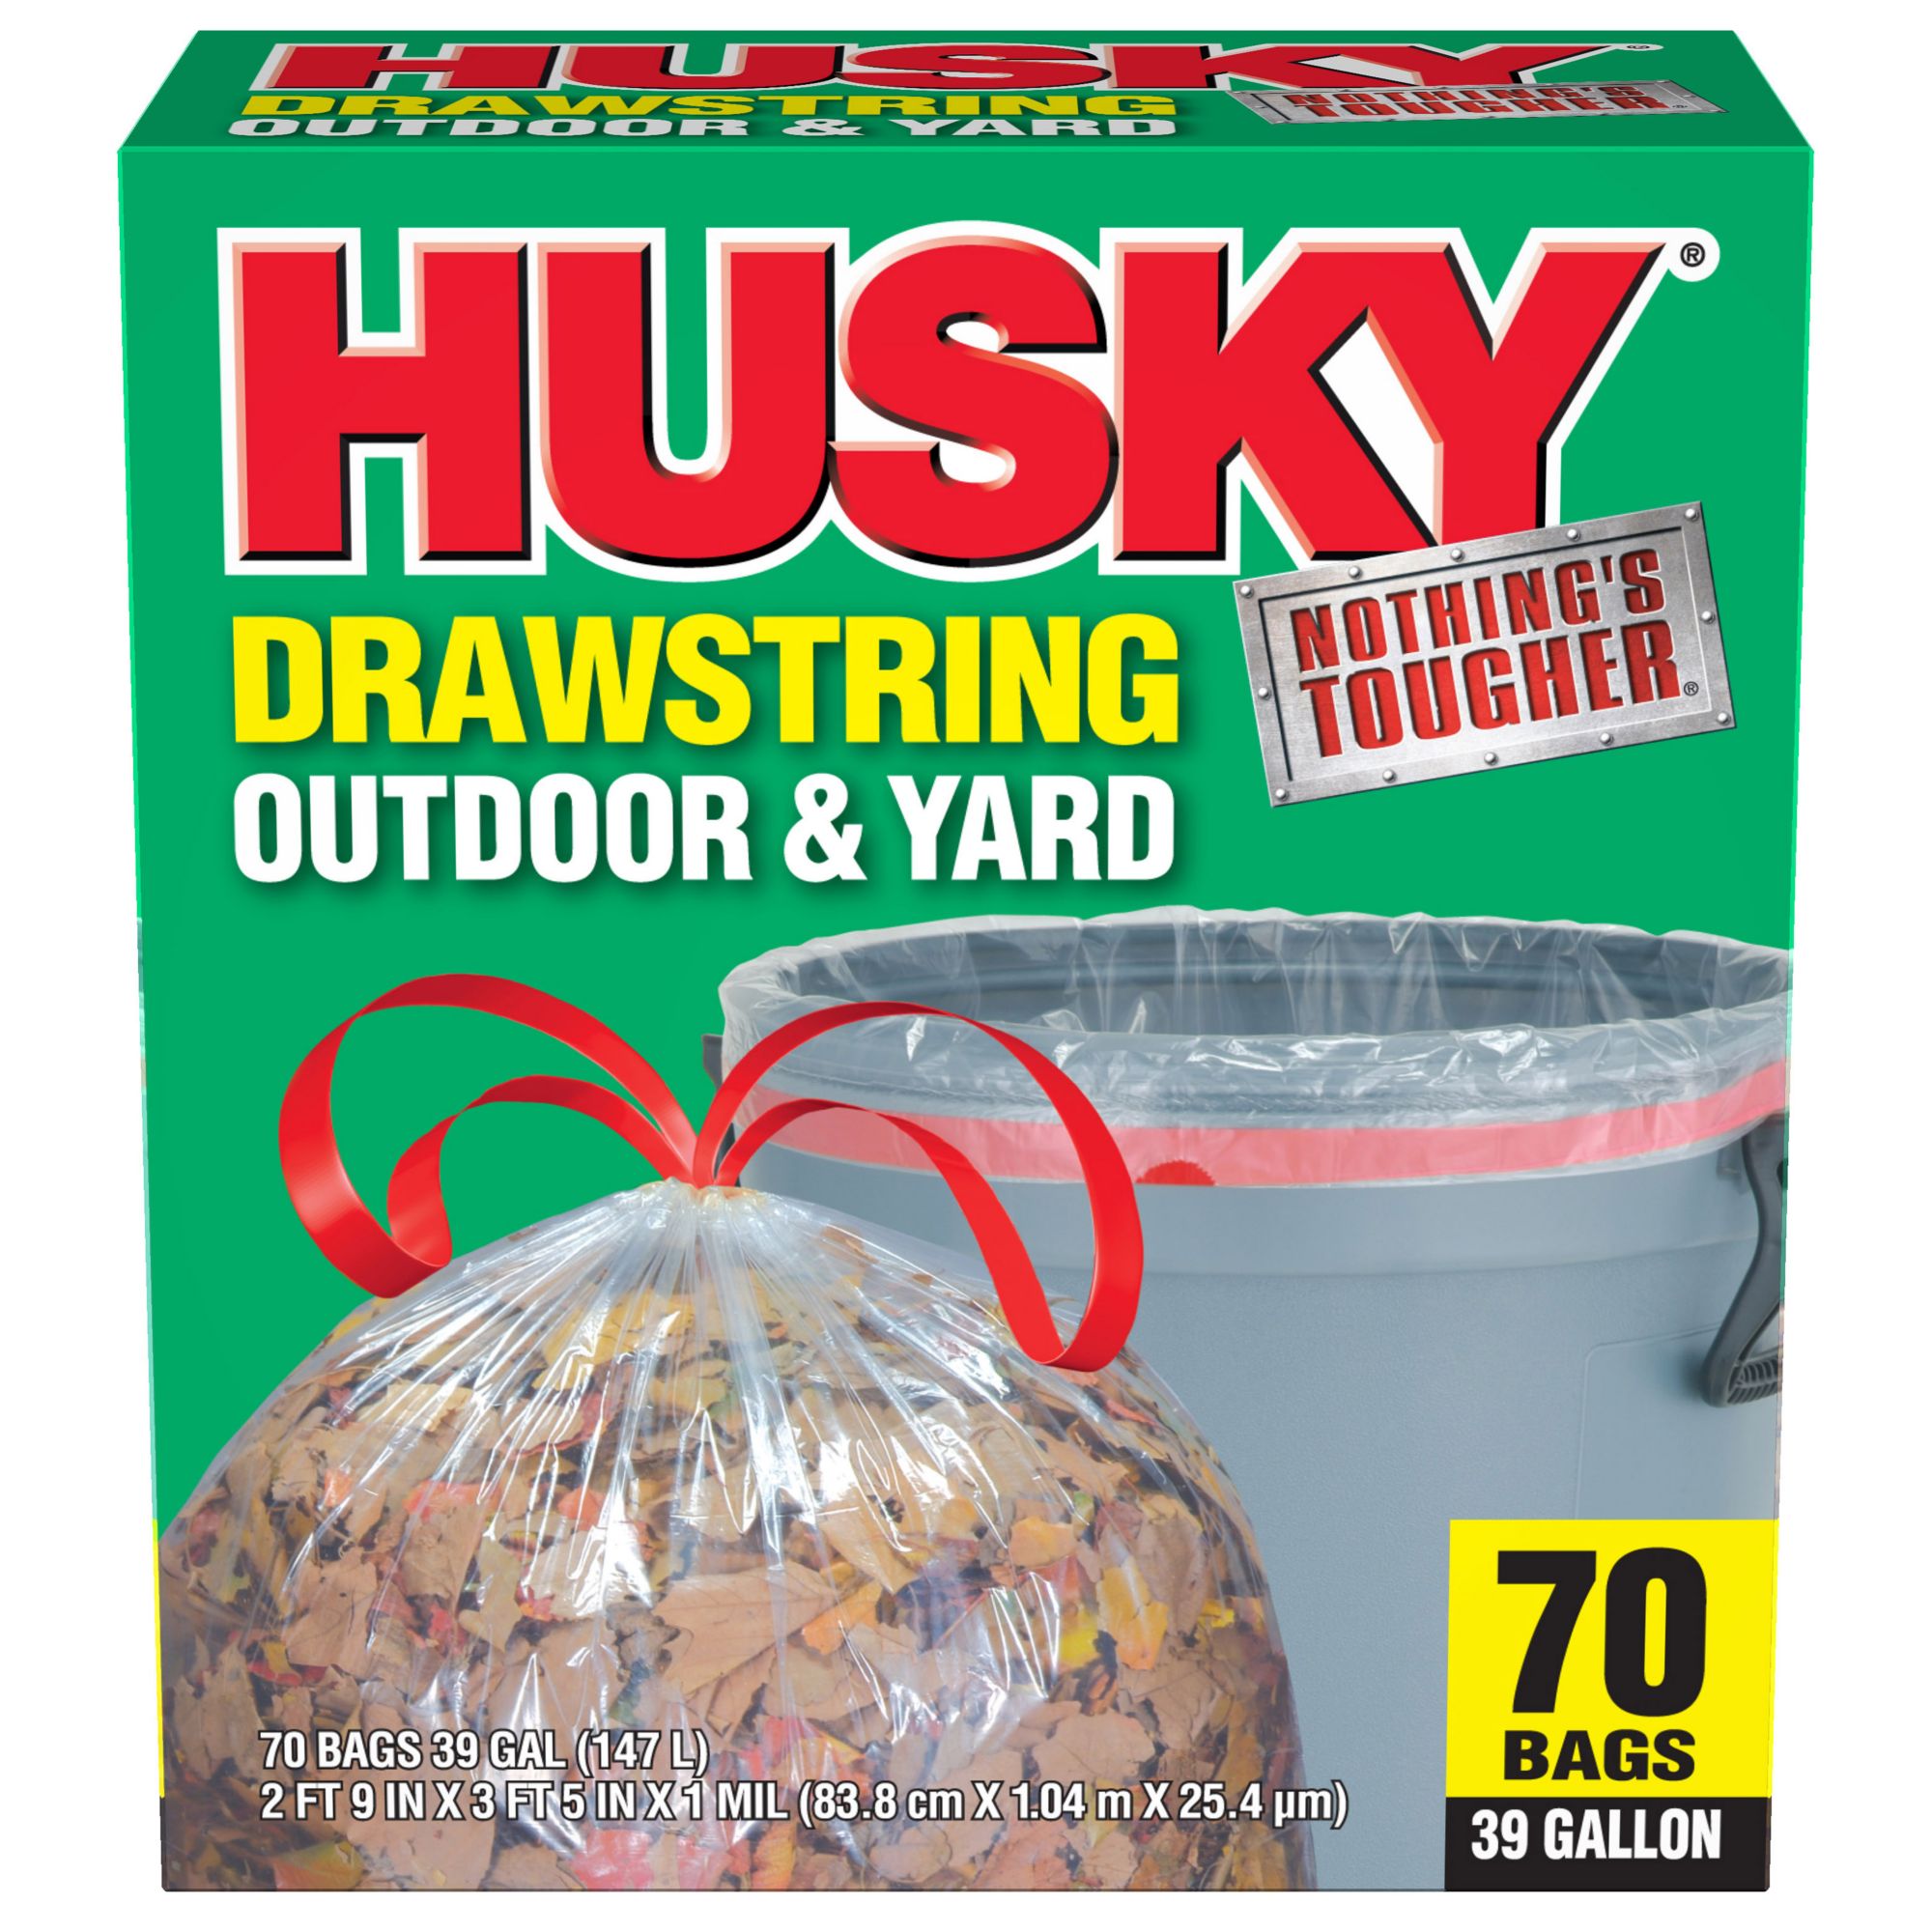 Husky Drawstring Kitchen 13 Gallon Trash Bags - Shop Trash Bags at